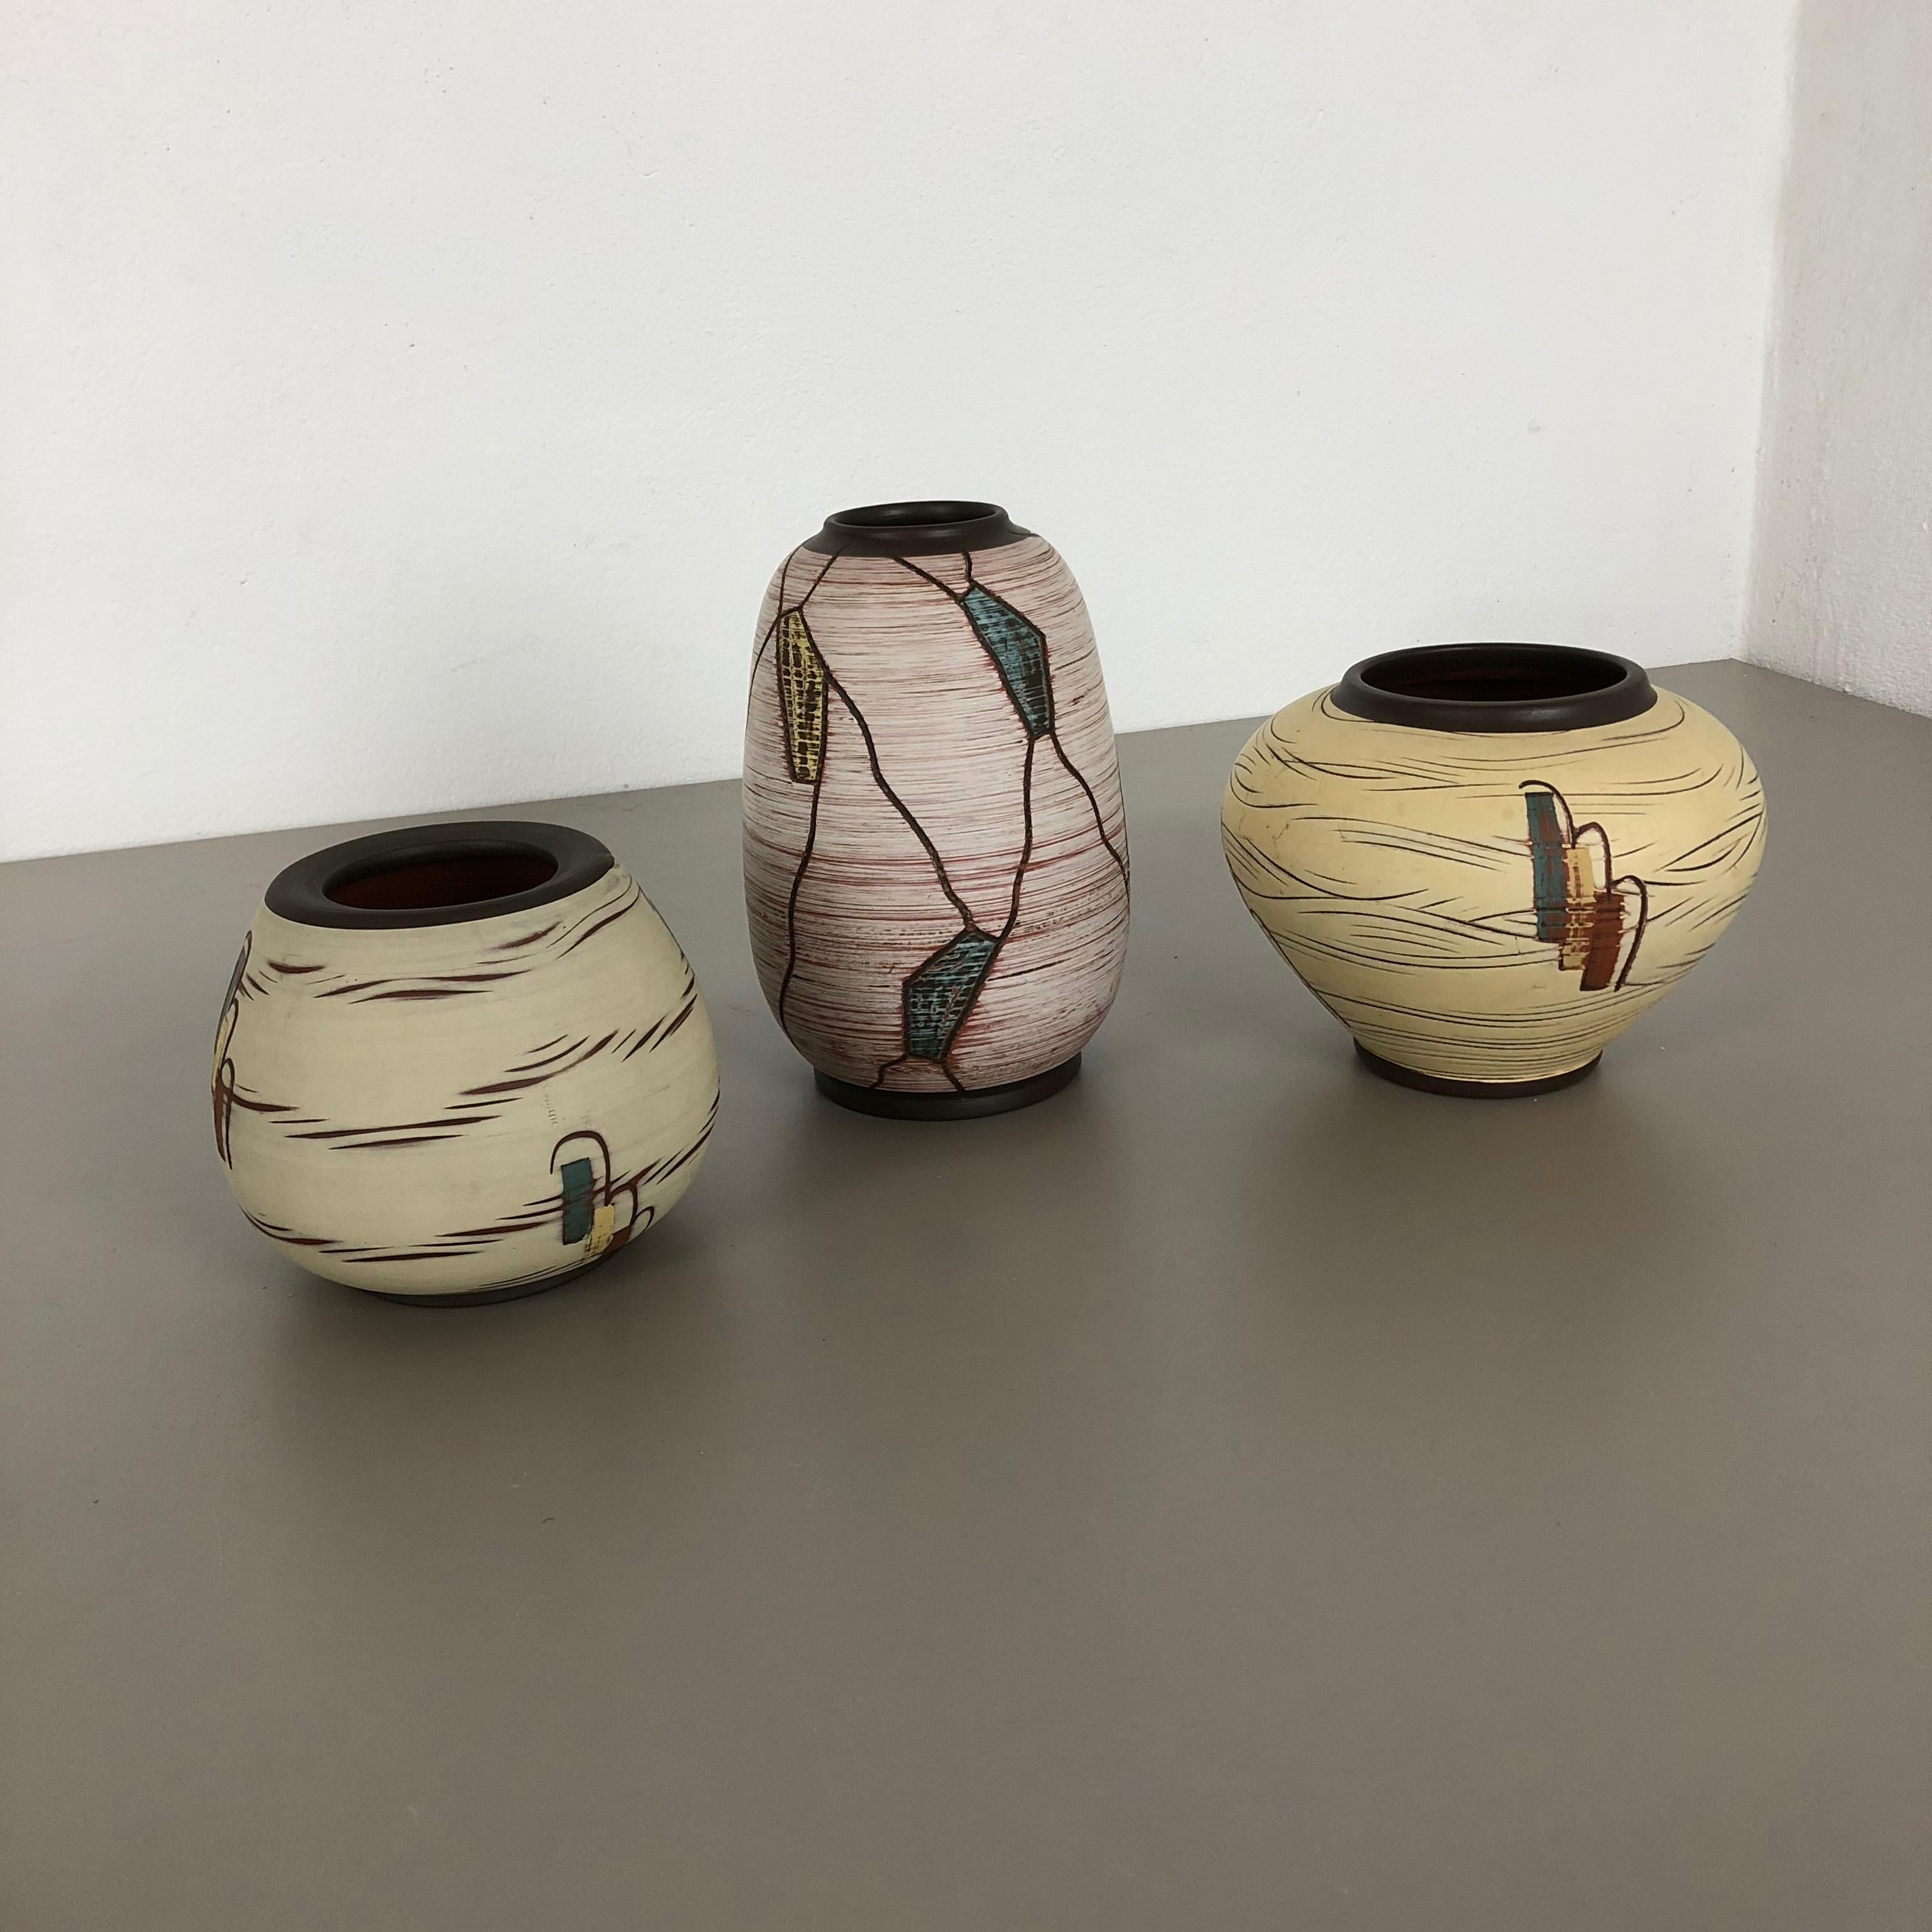 Article: 

Pottery ceramic vases set of 3


Producer: 

Sawa Ceramic, Germany


Design: 

Franz Schwaderlapp


Decade:

1960s


Description: 

Original vintage 1960s pottery ceramic vases set in Germany. High quality German